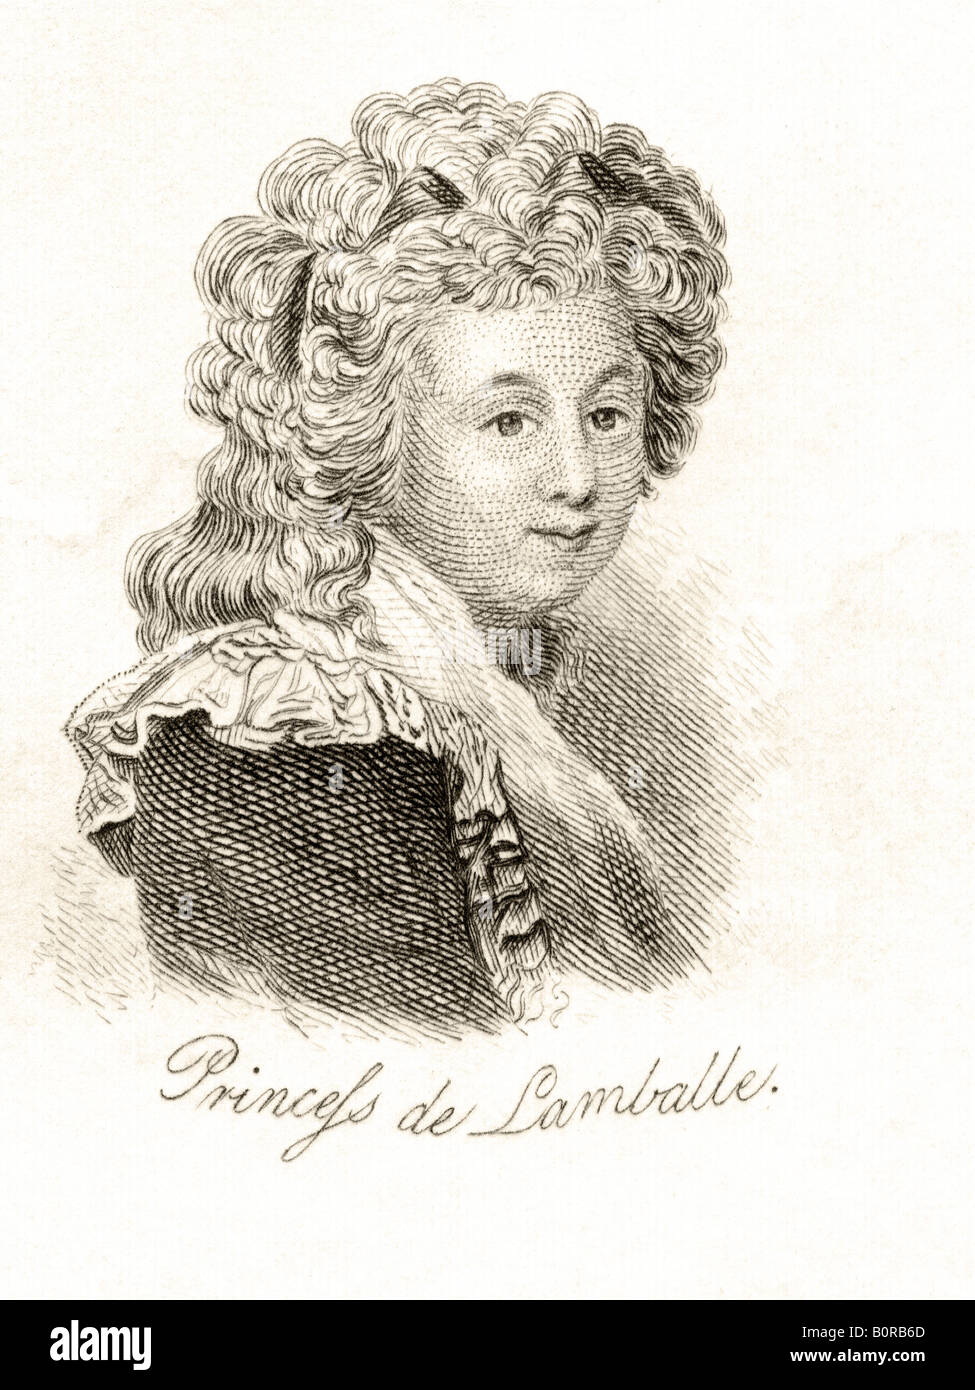 Princesse de Lamballe, Marie Thérèse Louise de Savoie Carignan, 1749 - 1792. Italienischer französischer Höfling. Stockfoto